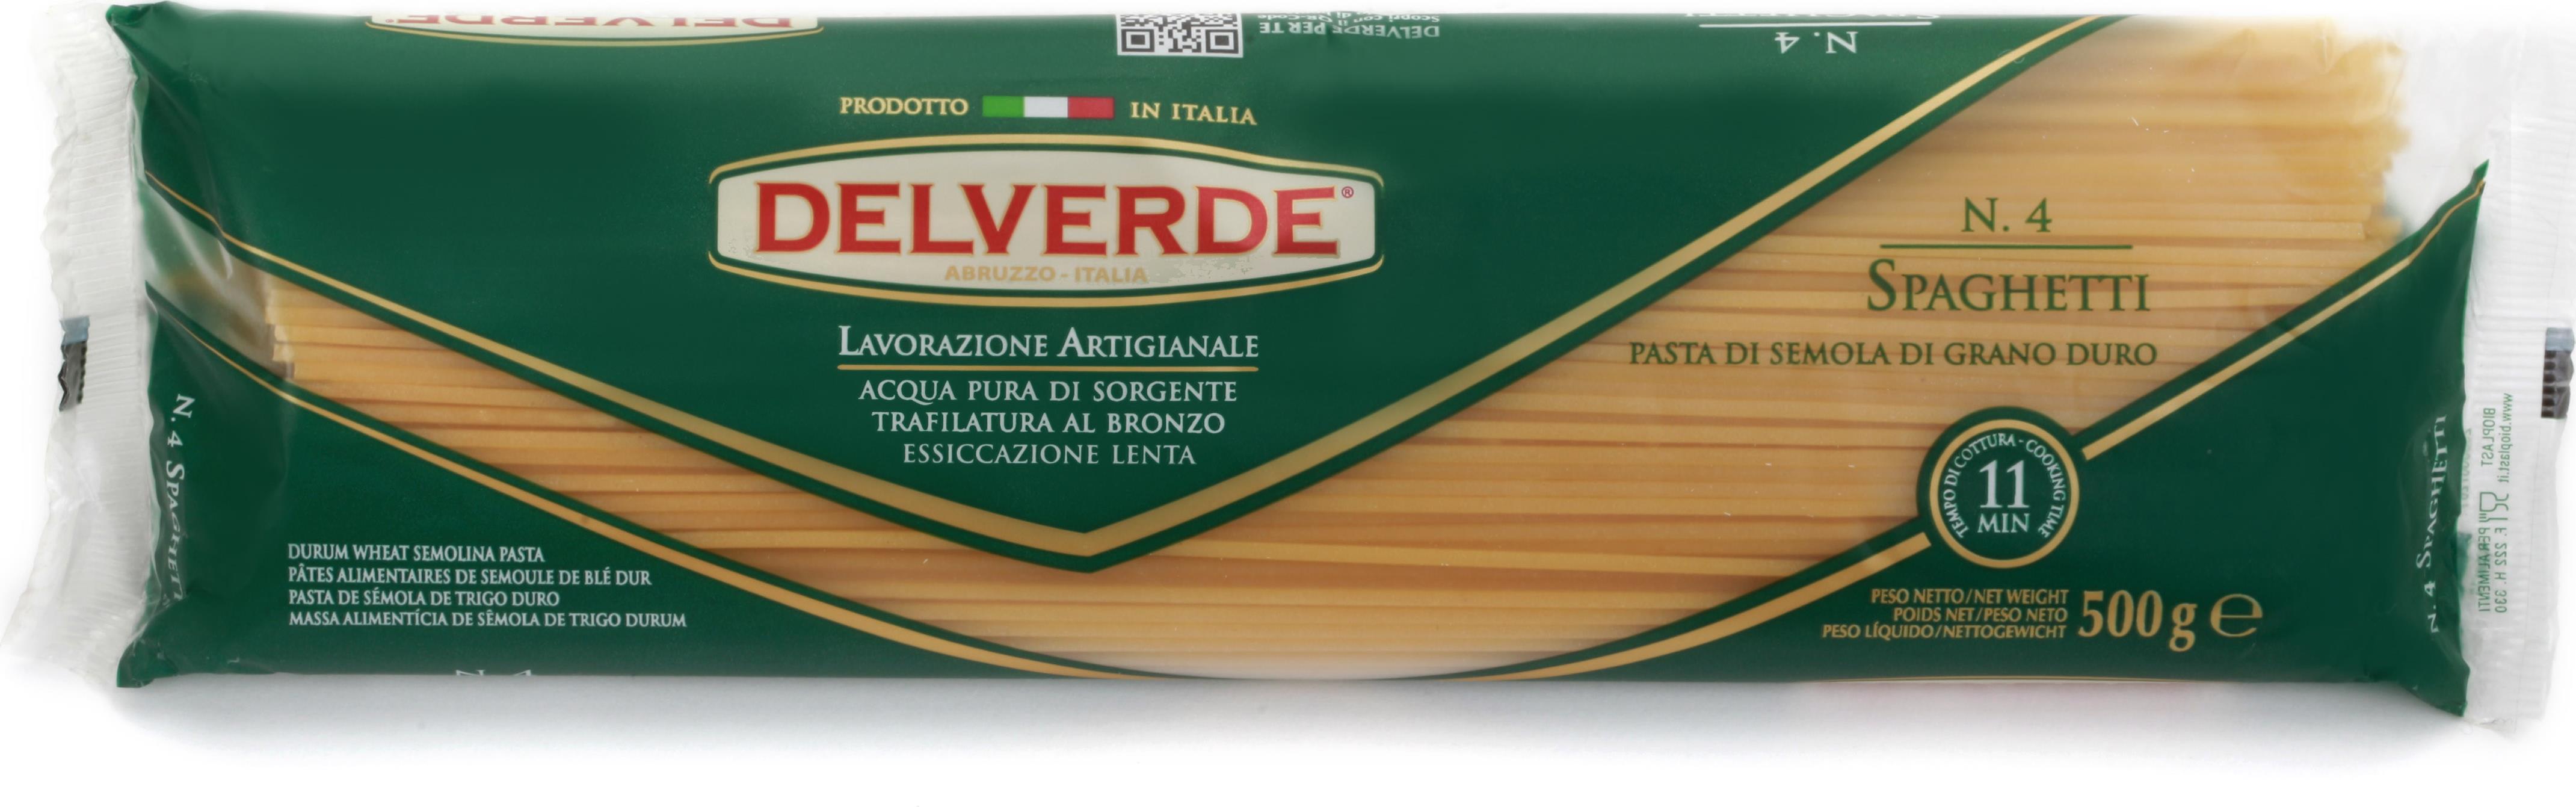 Макароны Delverde Спагетти № 4